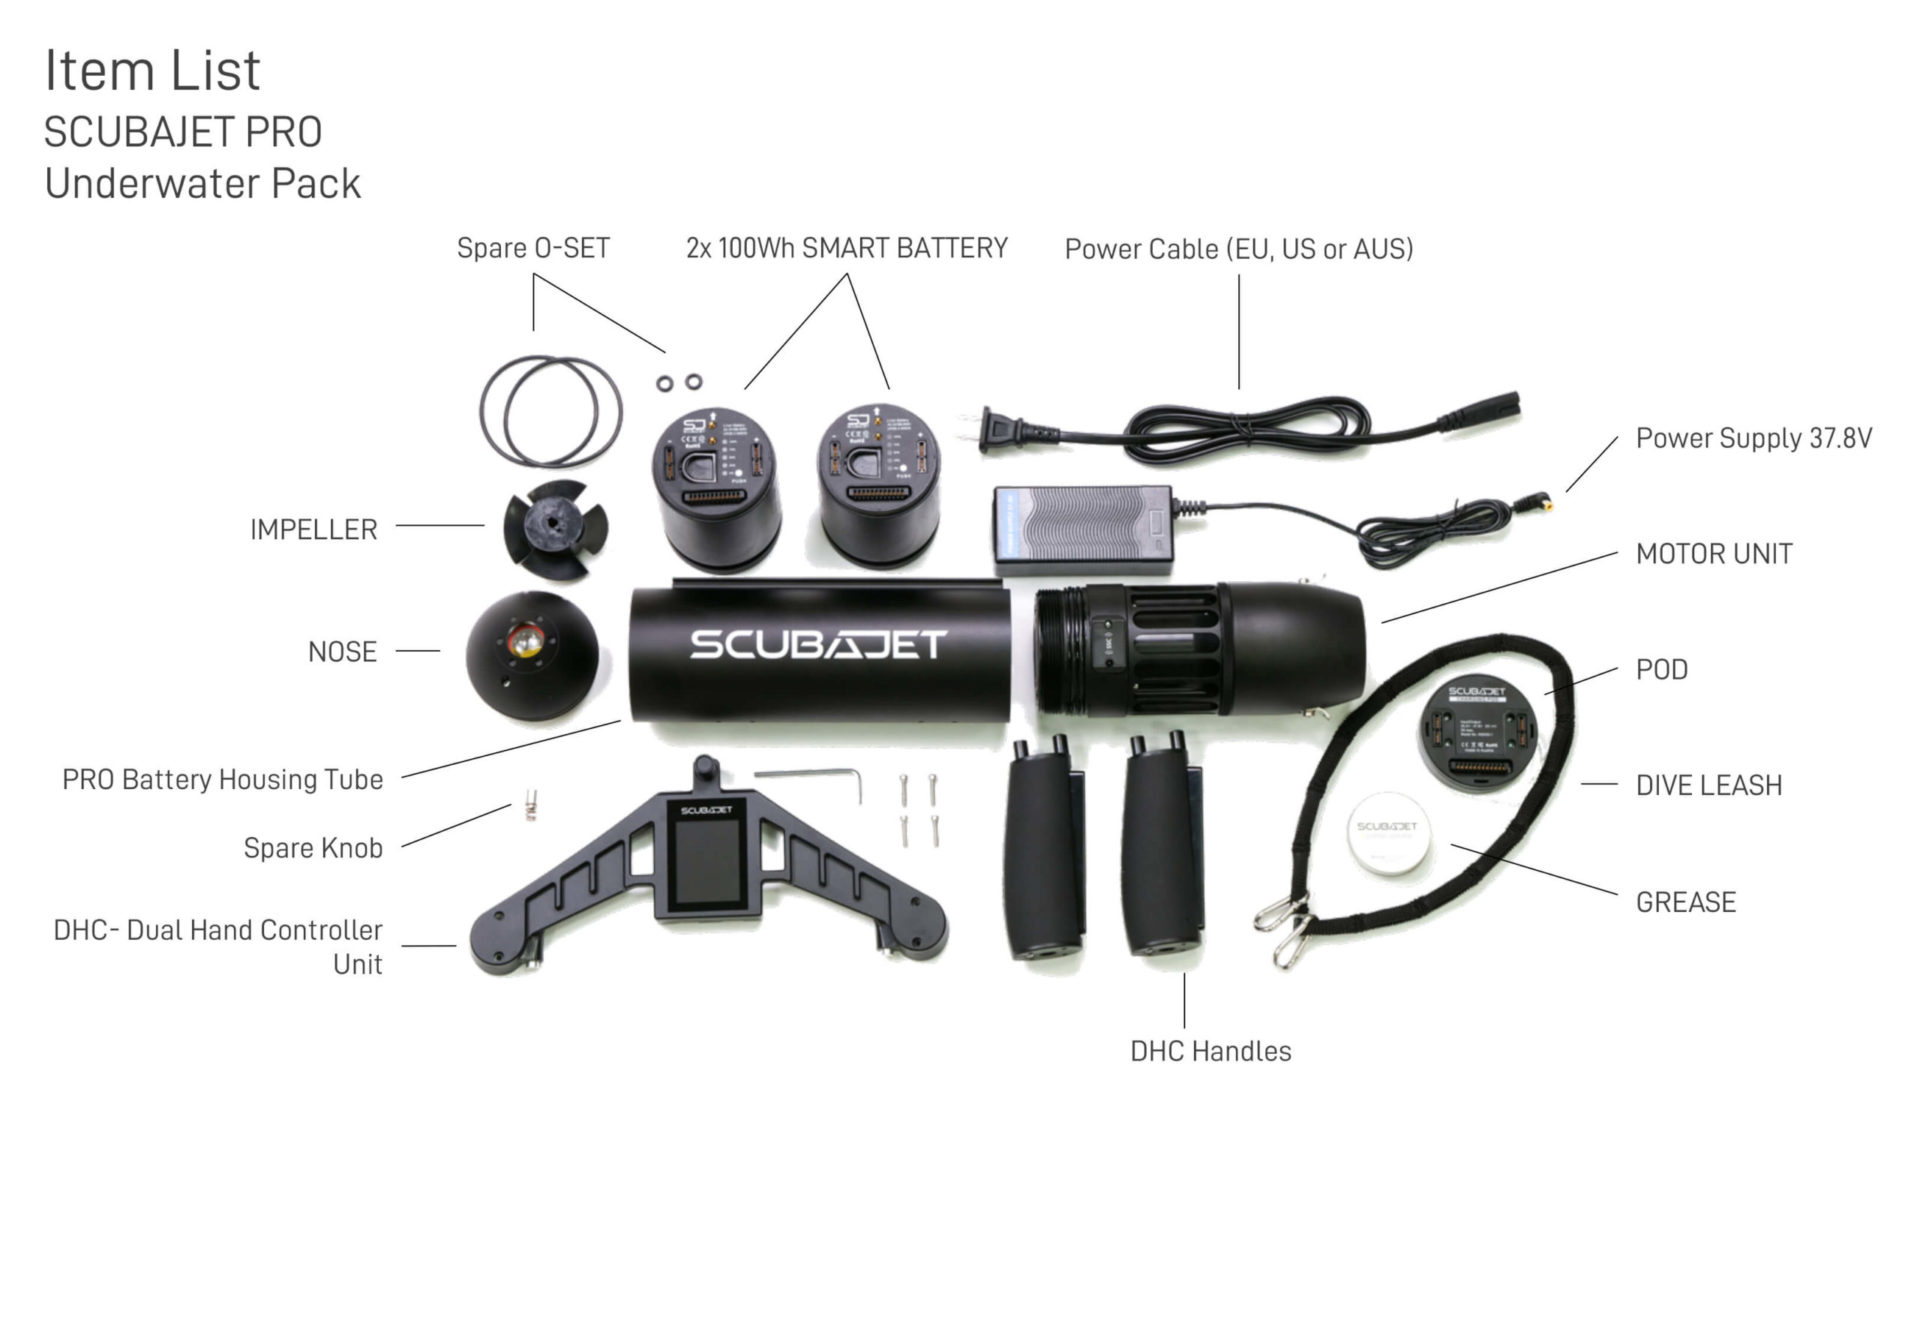 ScubaJet Pro Underwater Pack item list.